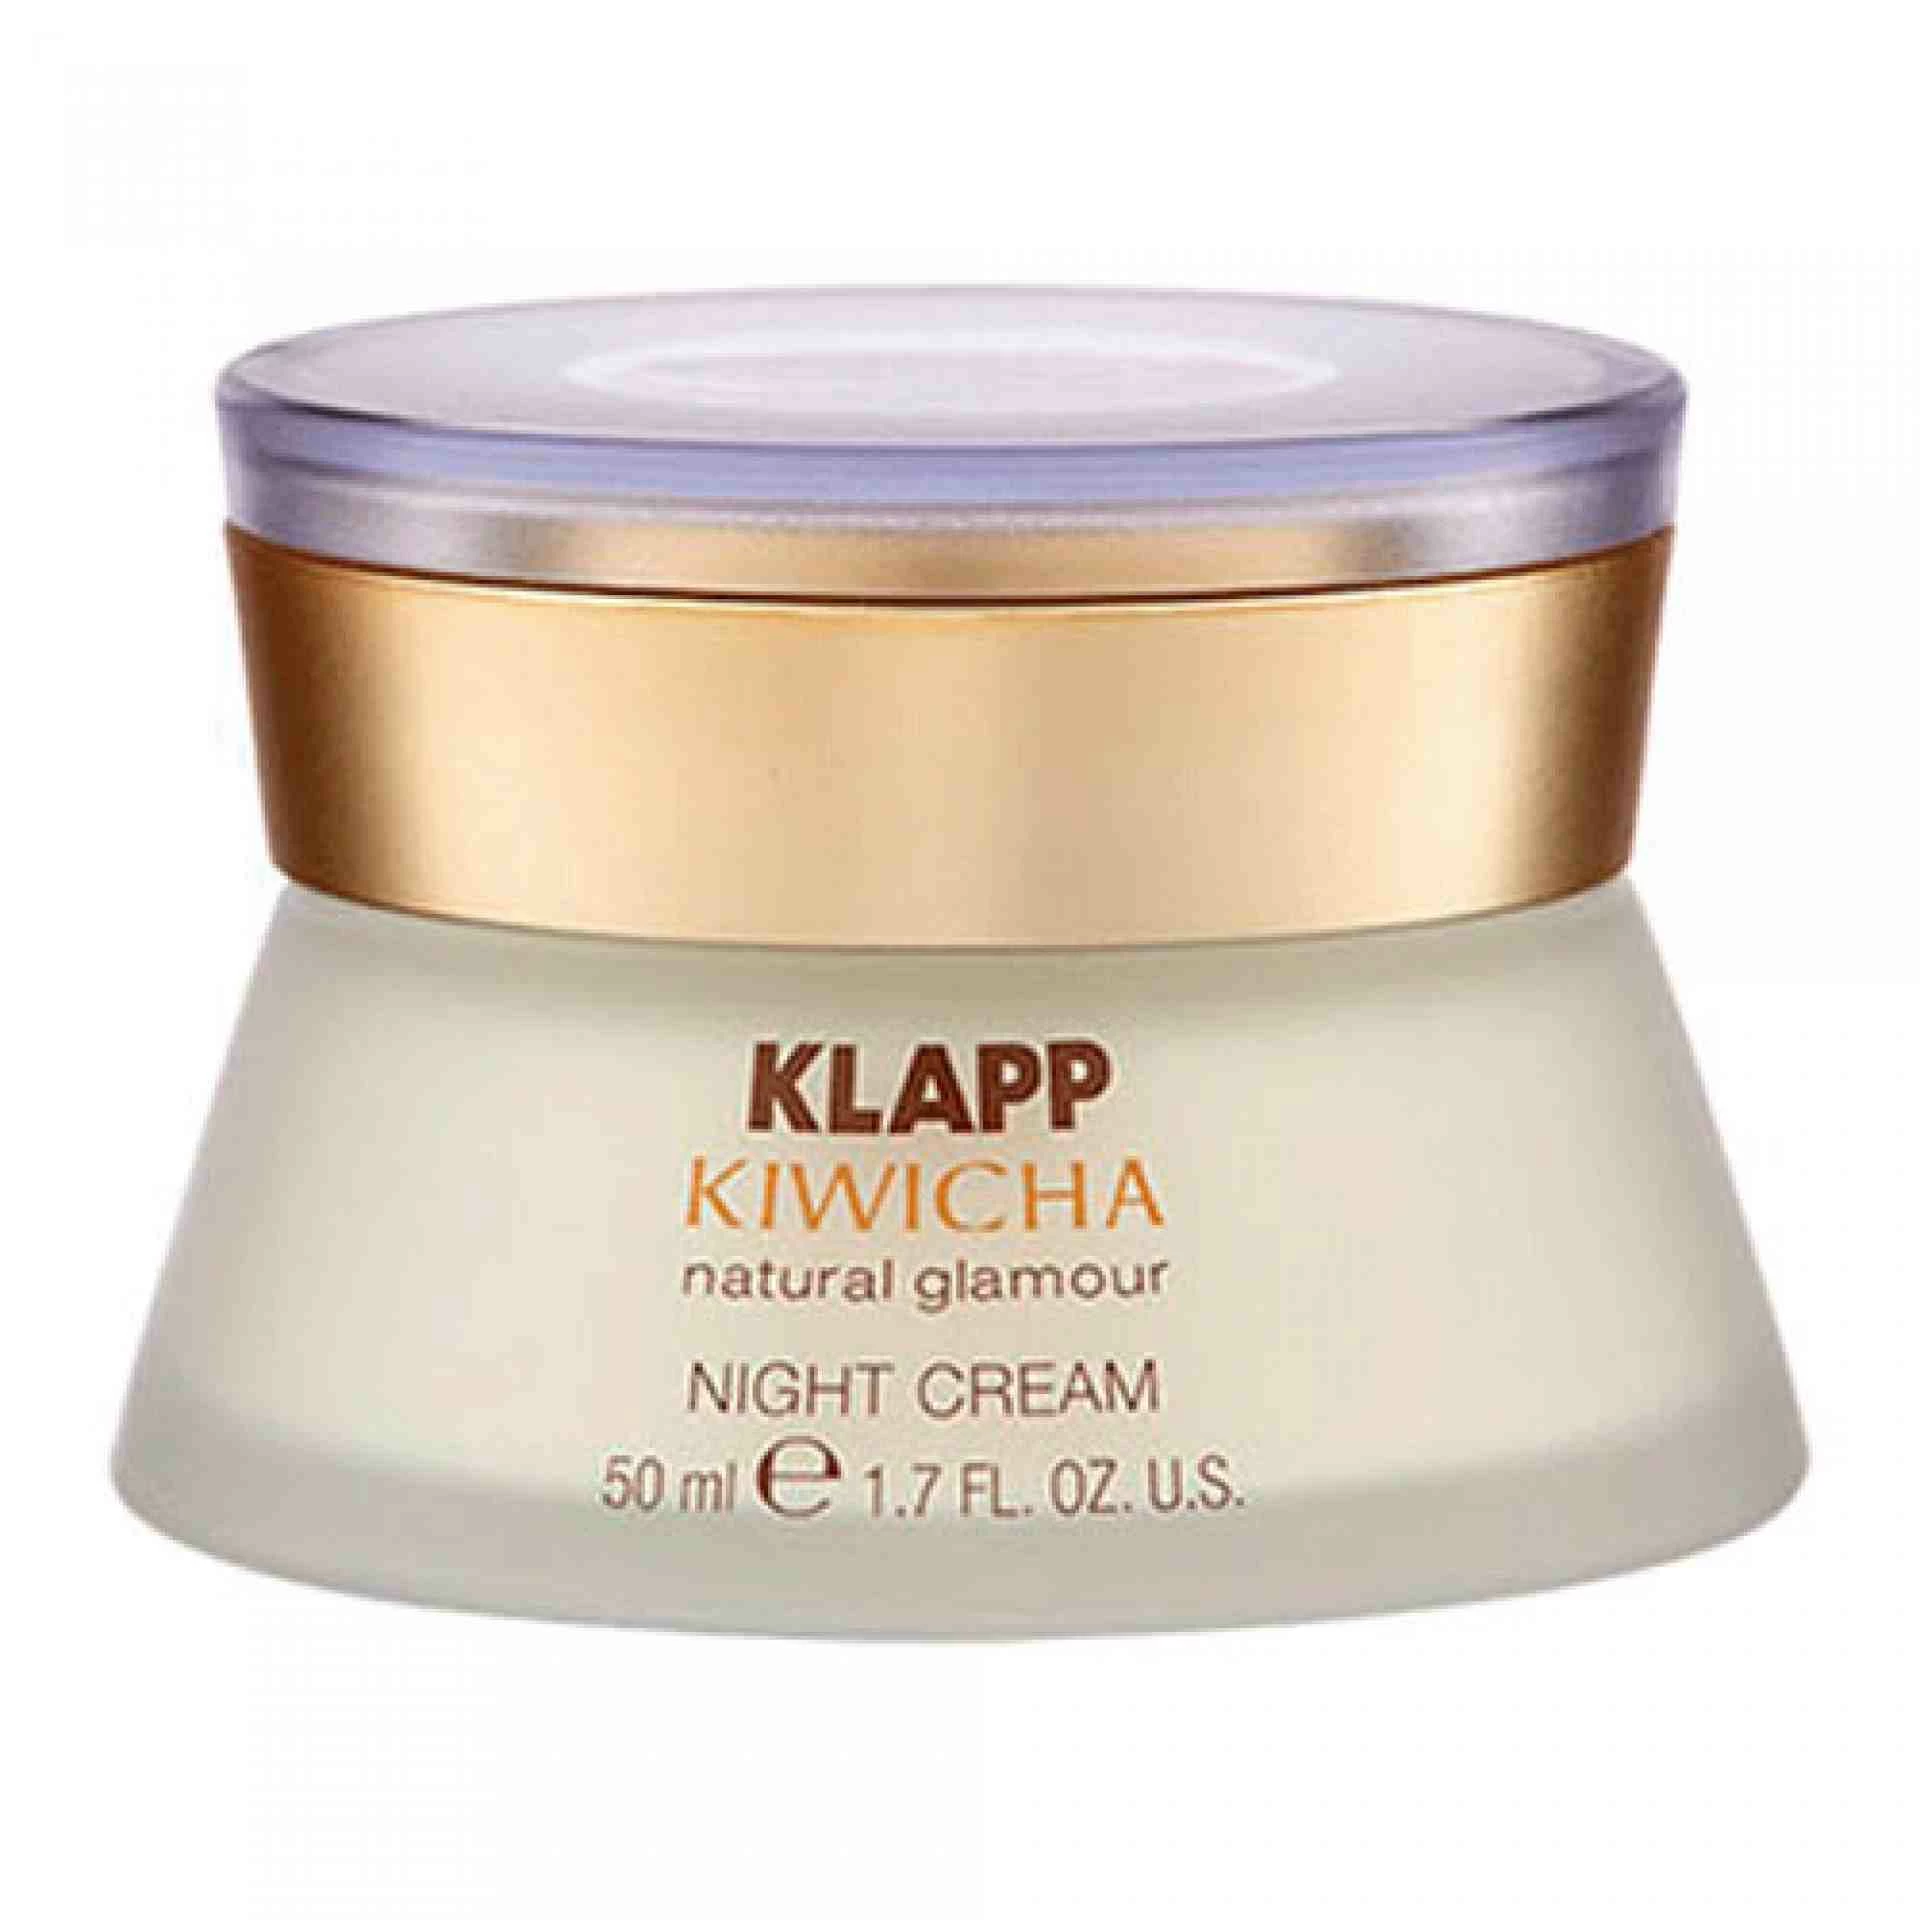 Kiwicha Night Cream 50ml Klapp®